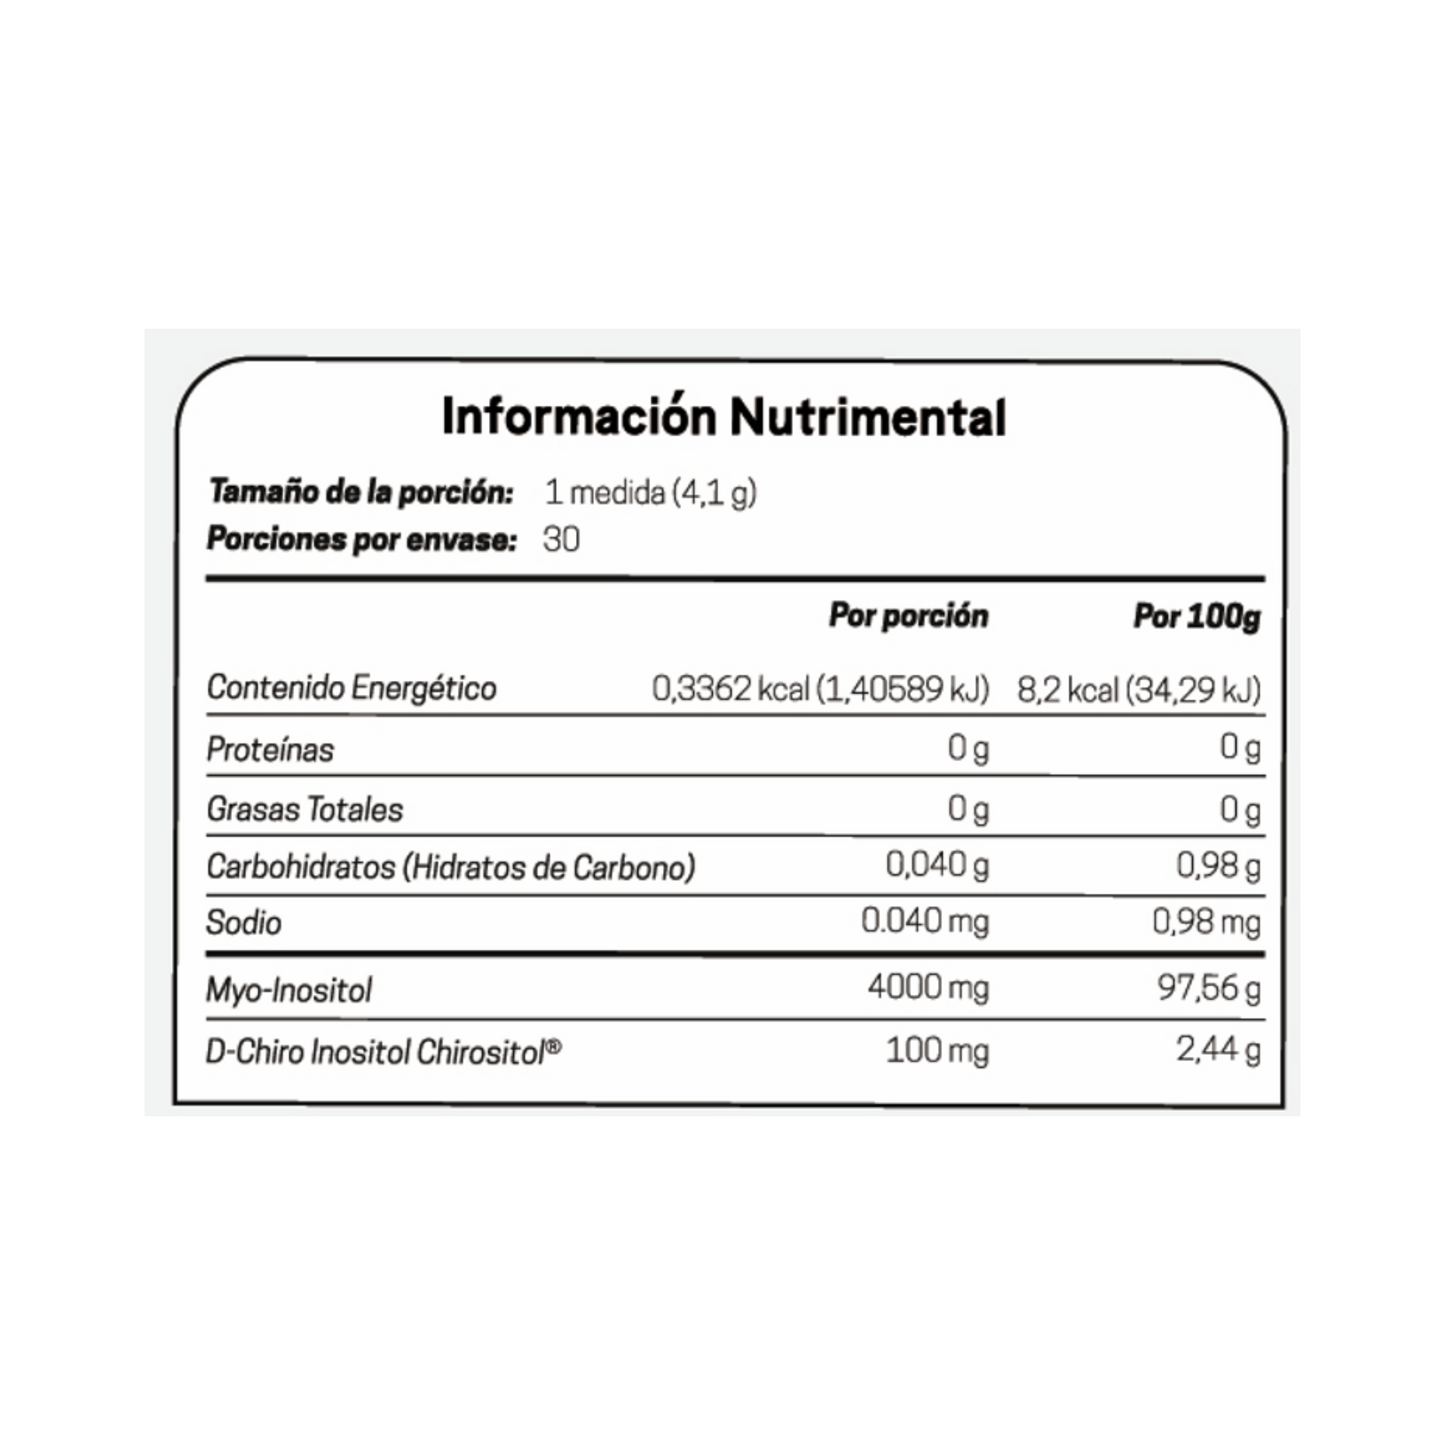 Tabla nutrimental Myo y D-Chiro Inositol